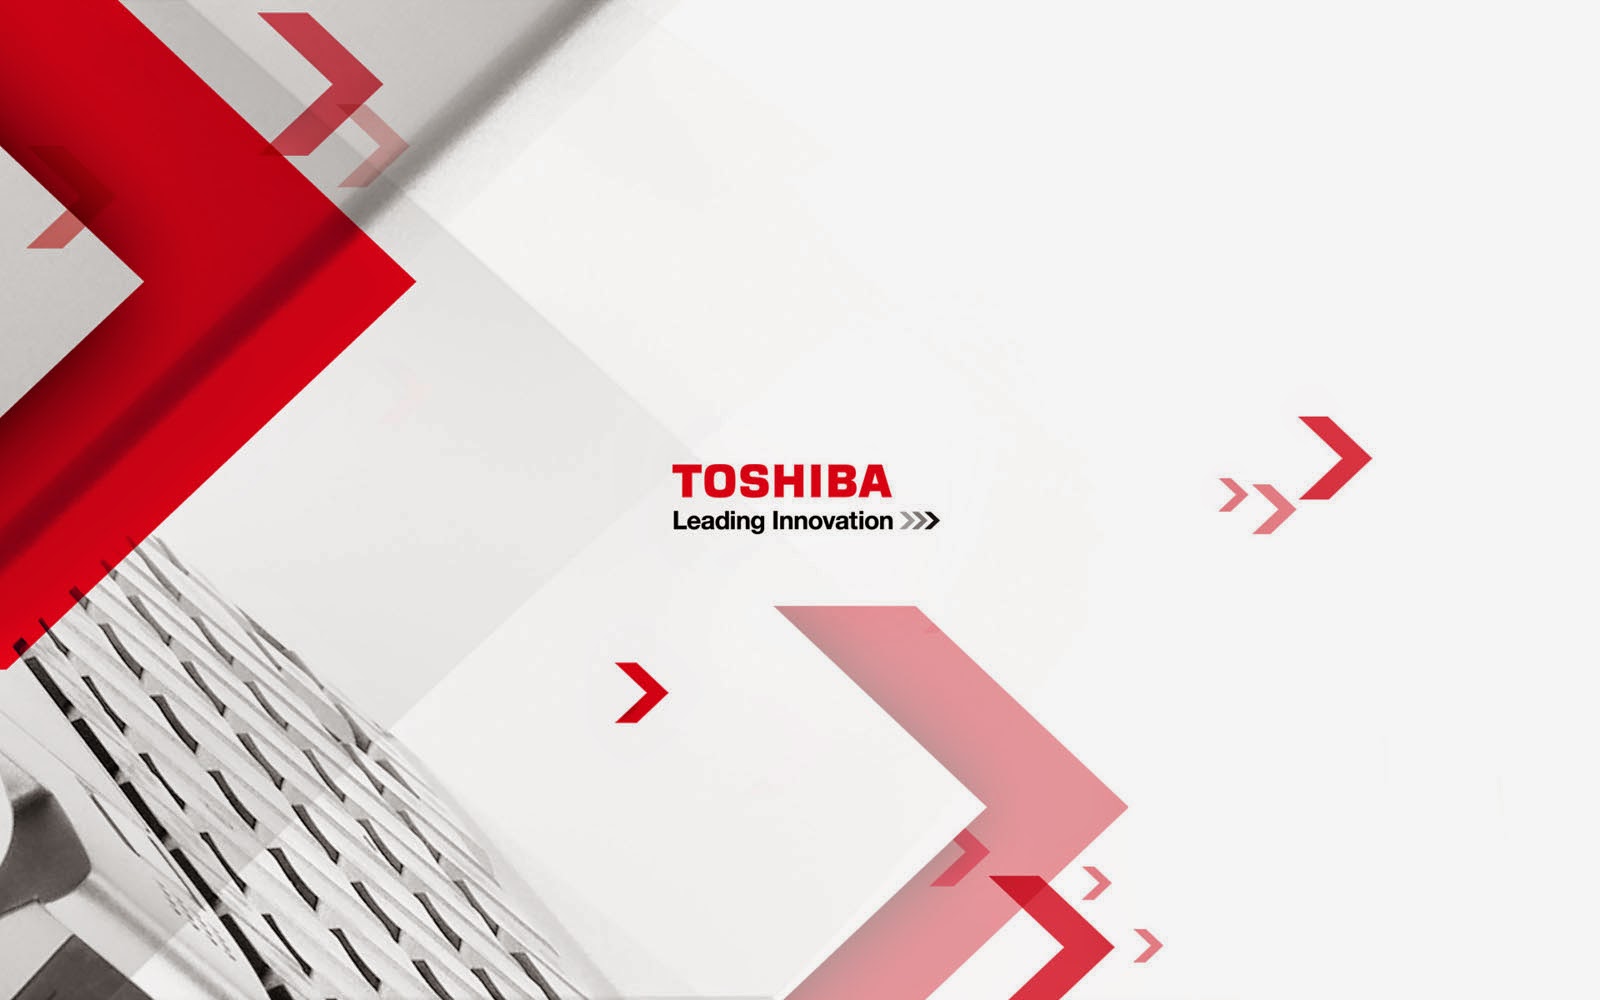 wallpapers: Toshiba Wallpapers